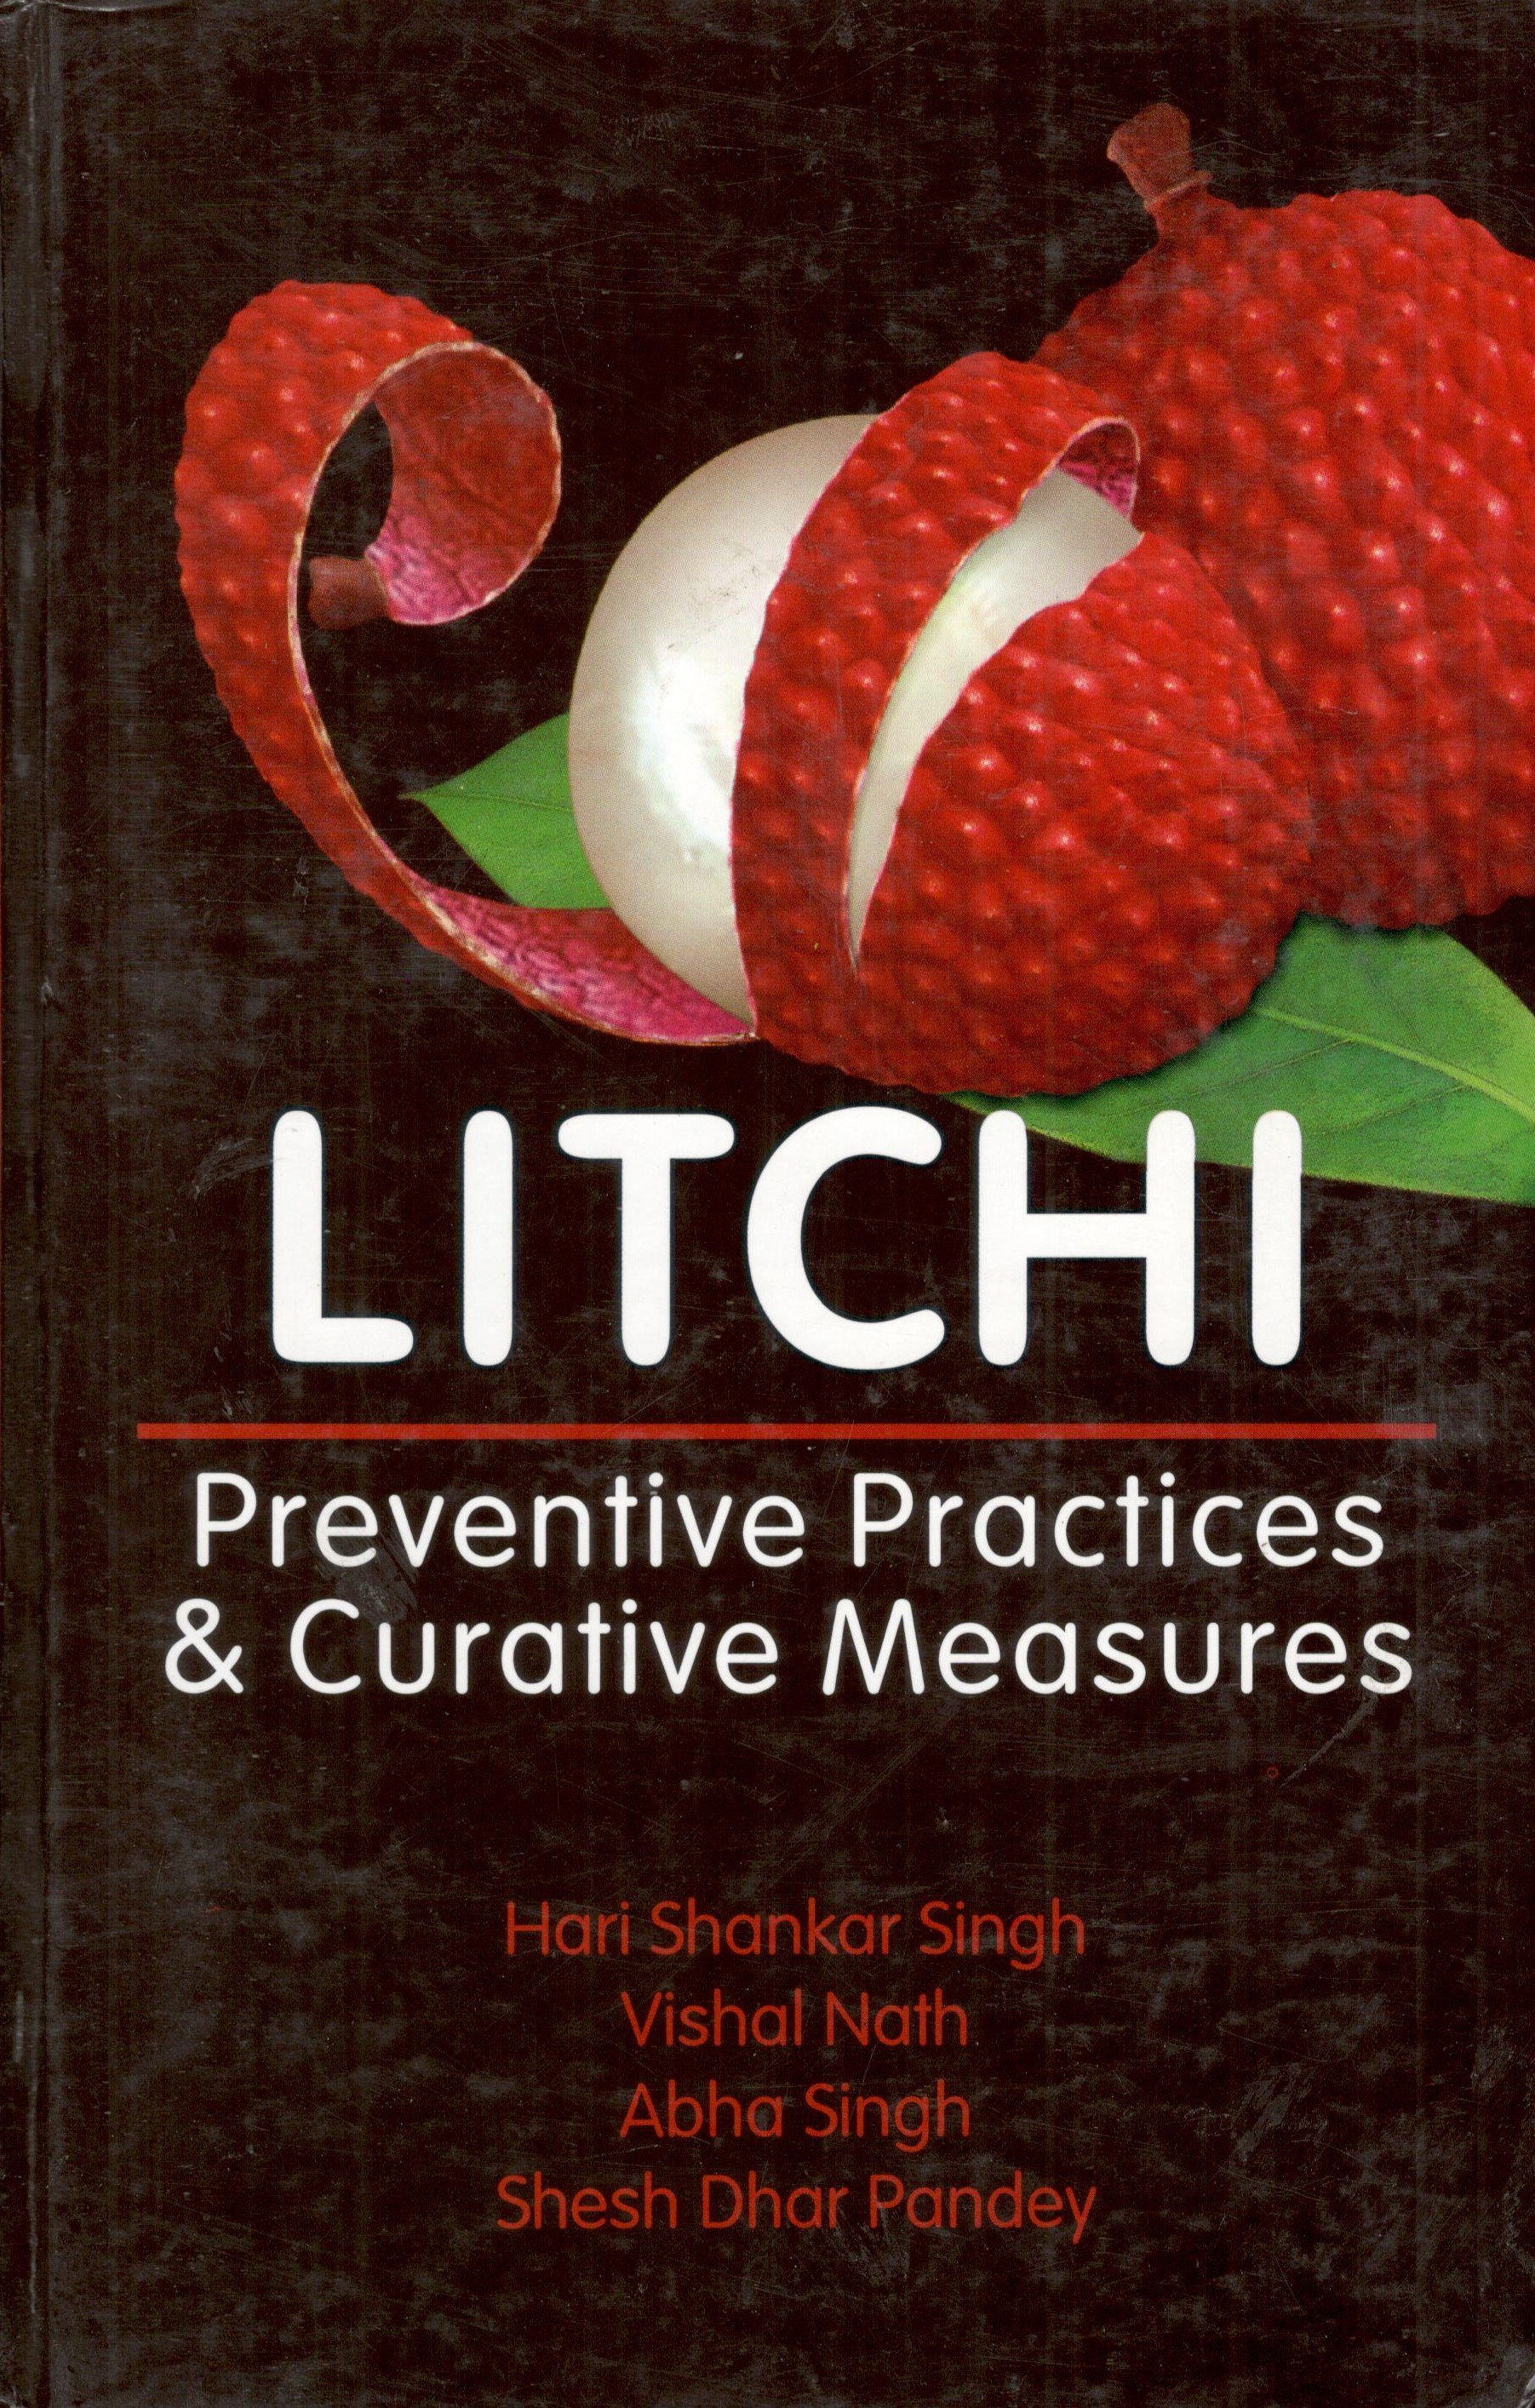 Litchi Preventive Practices & Curative Measures